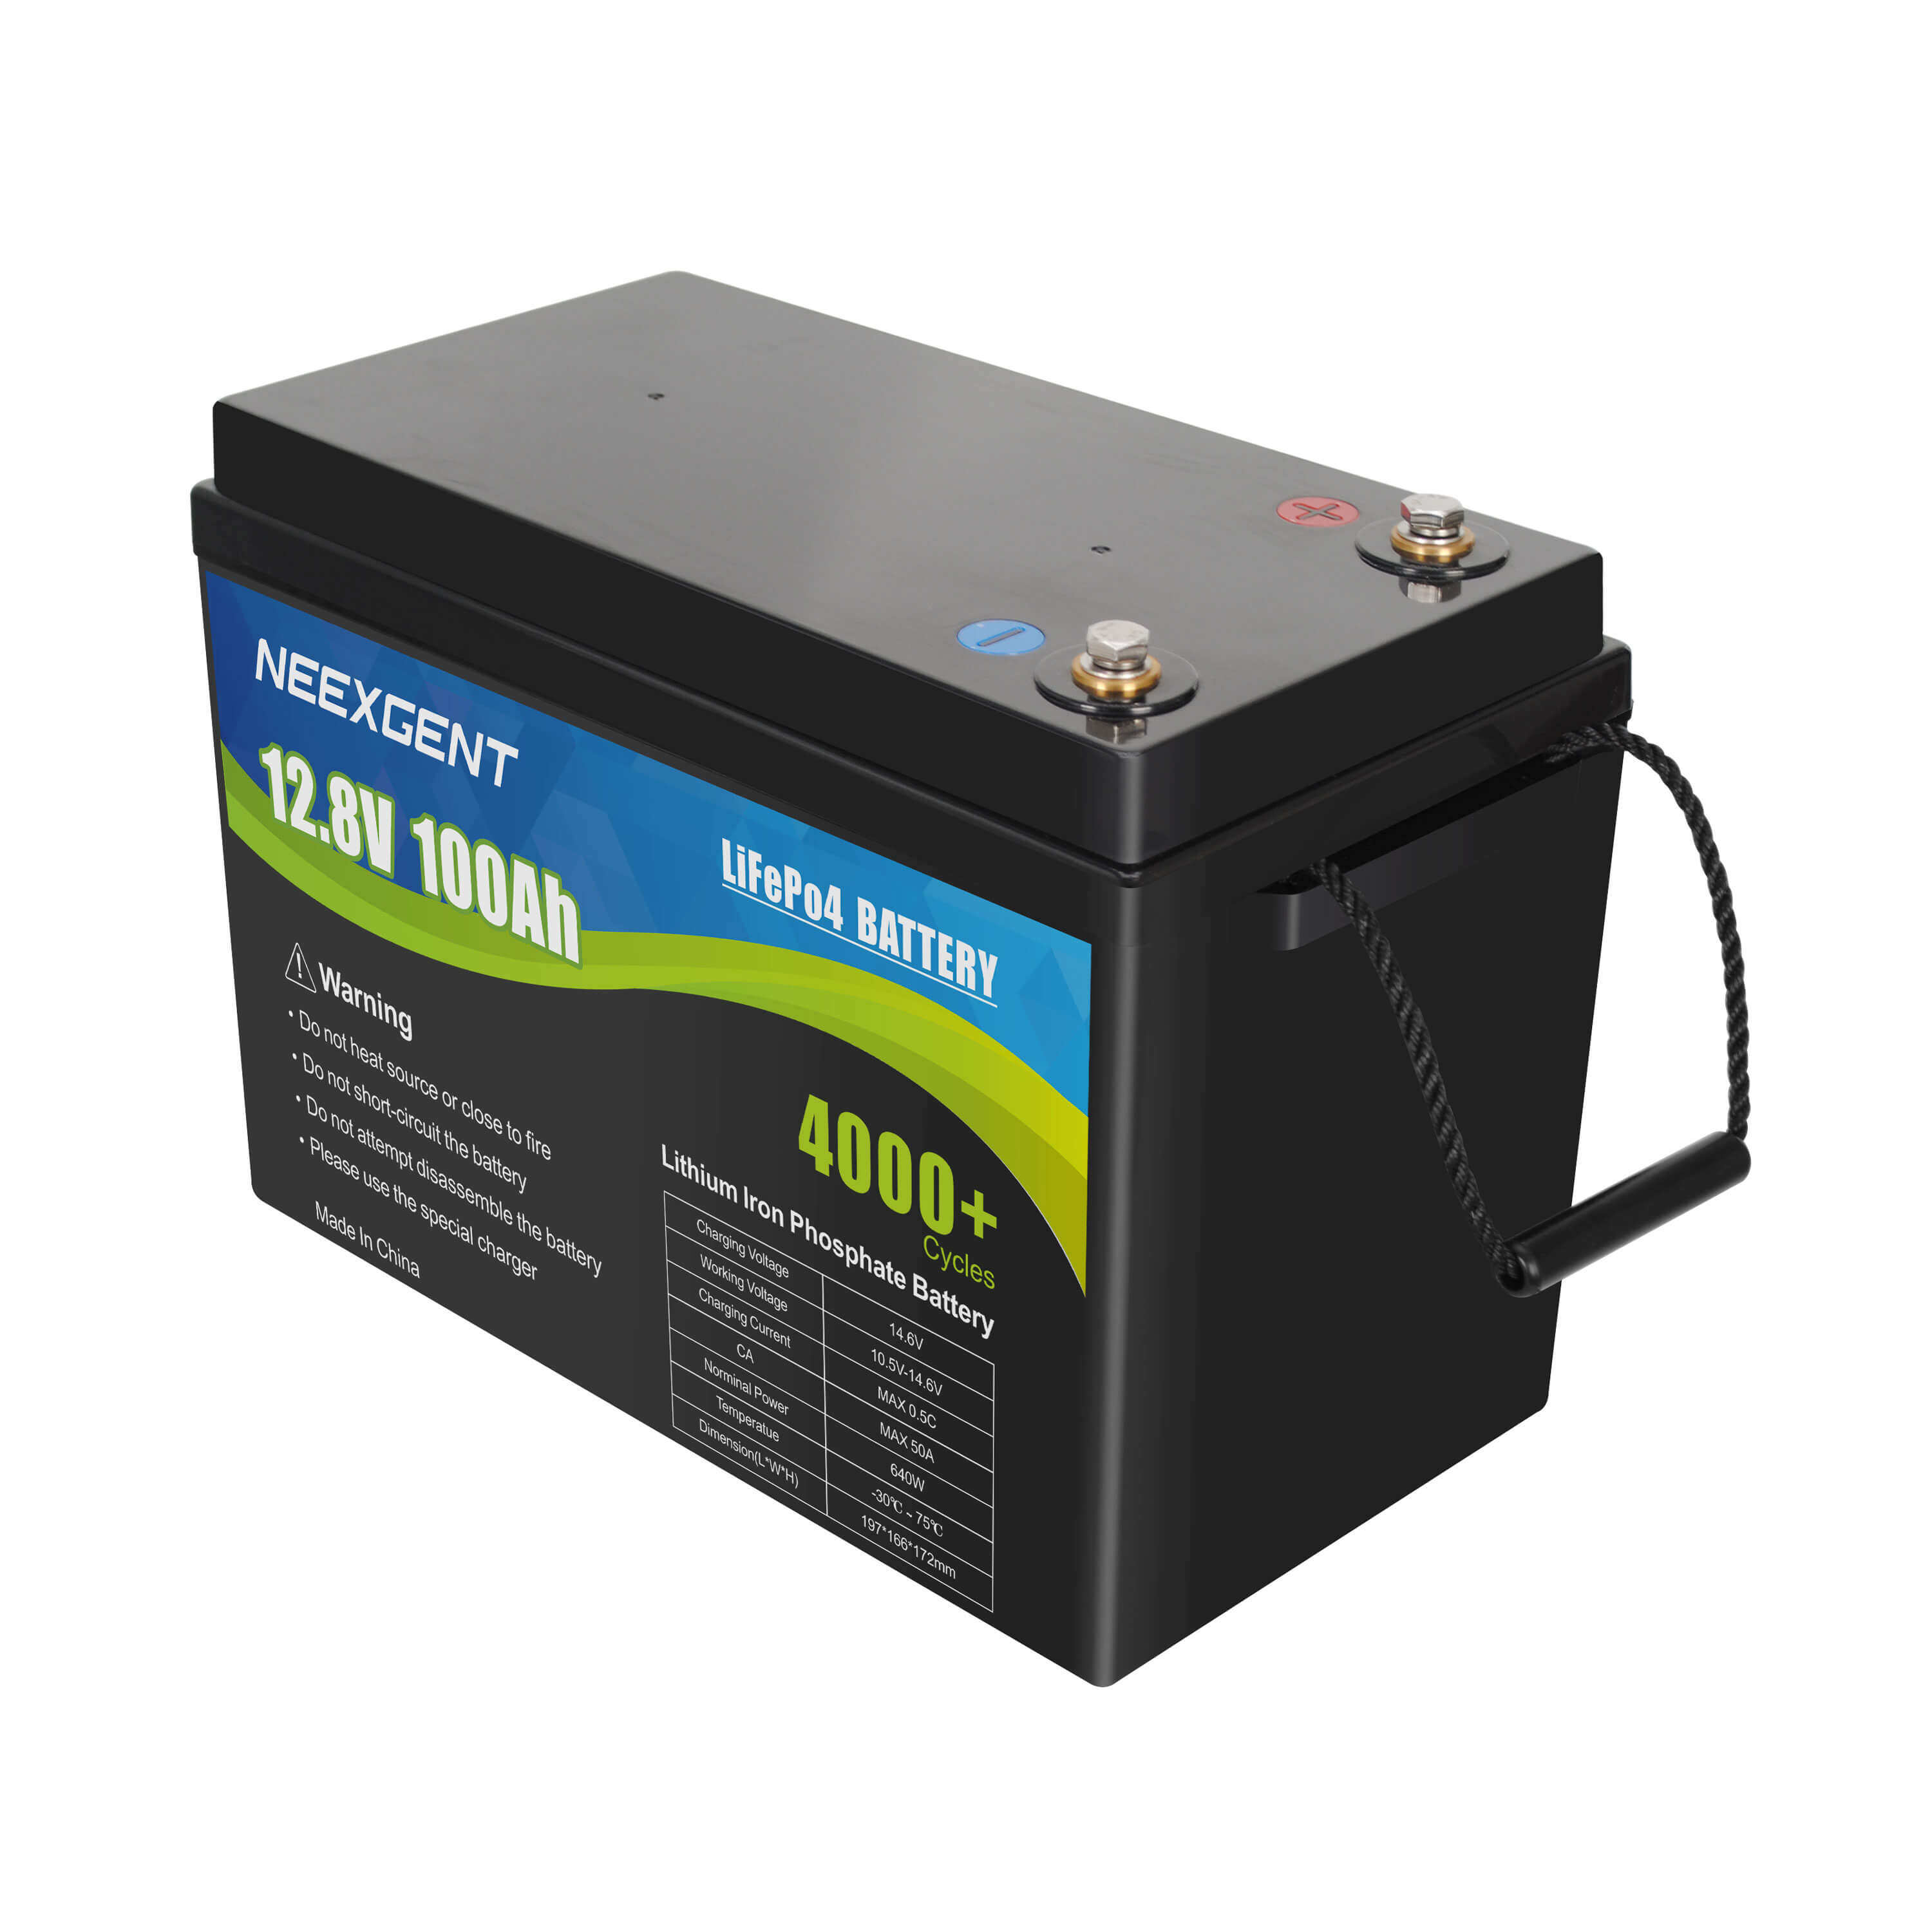 Solar bateria lifepo4 battery 12.8v 100ah lifepo4 battery pack with bms